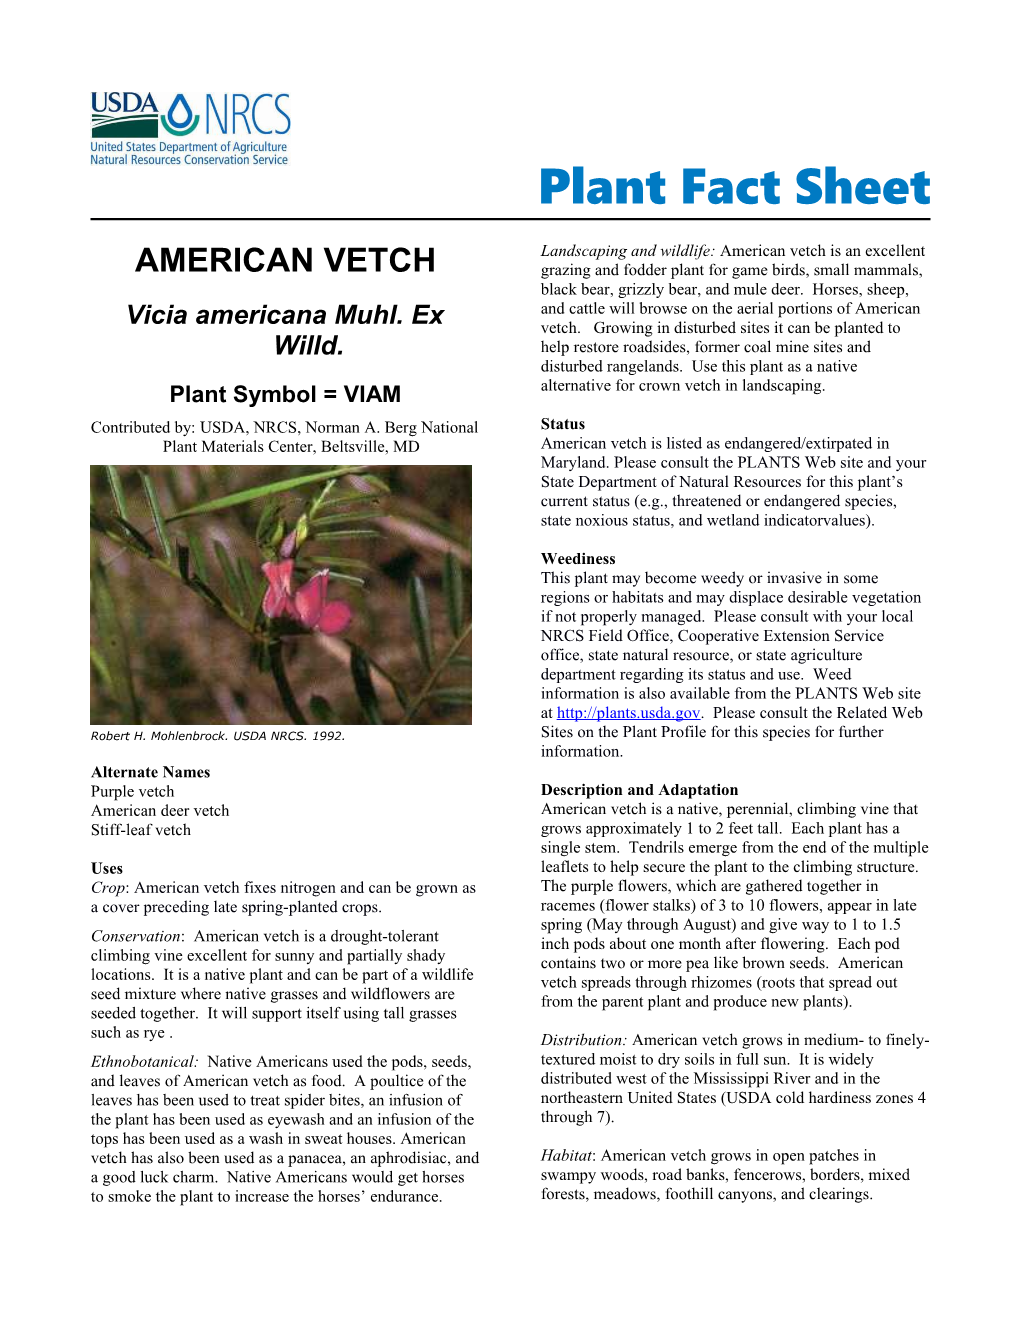 American Vetch Plant Fact Sheet